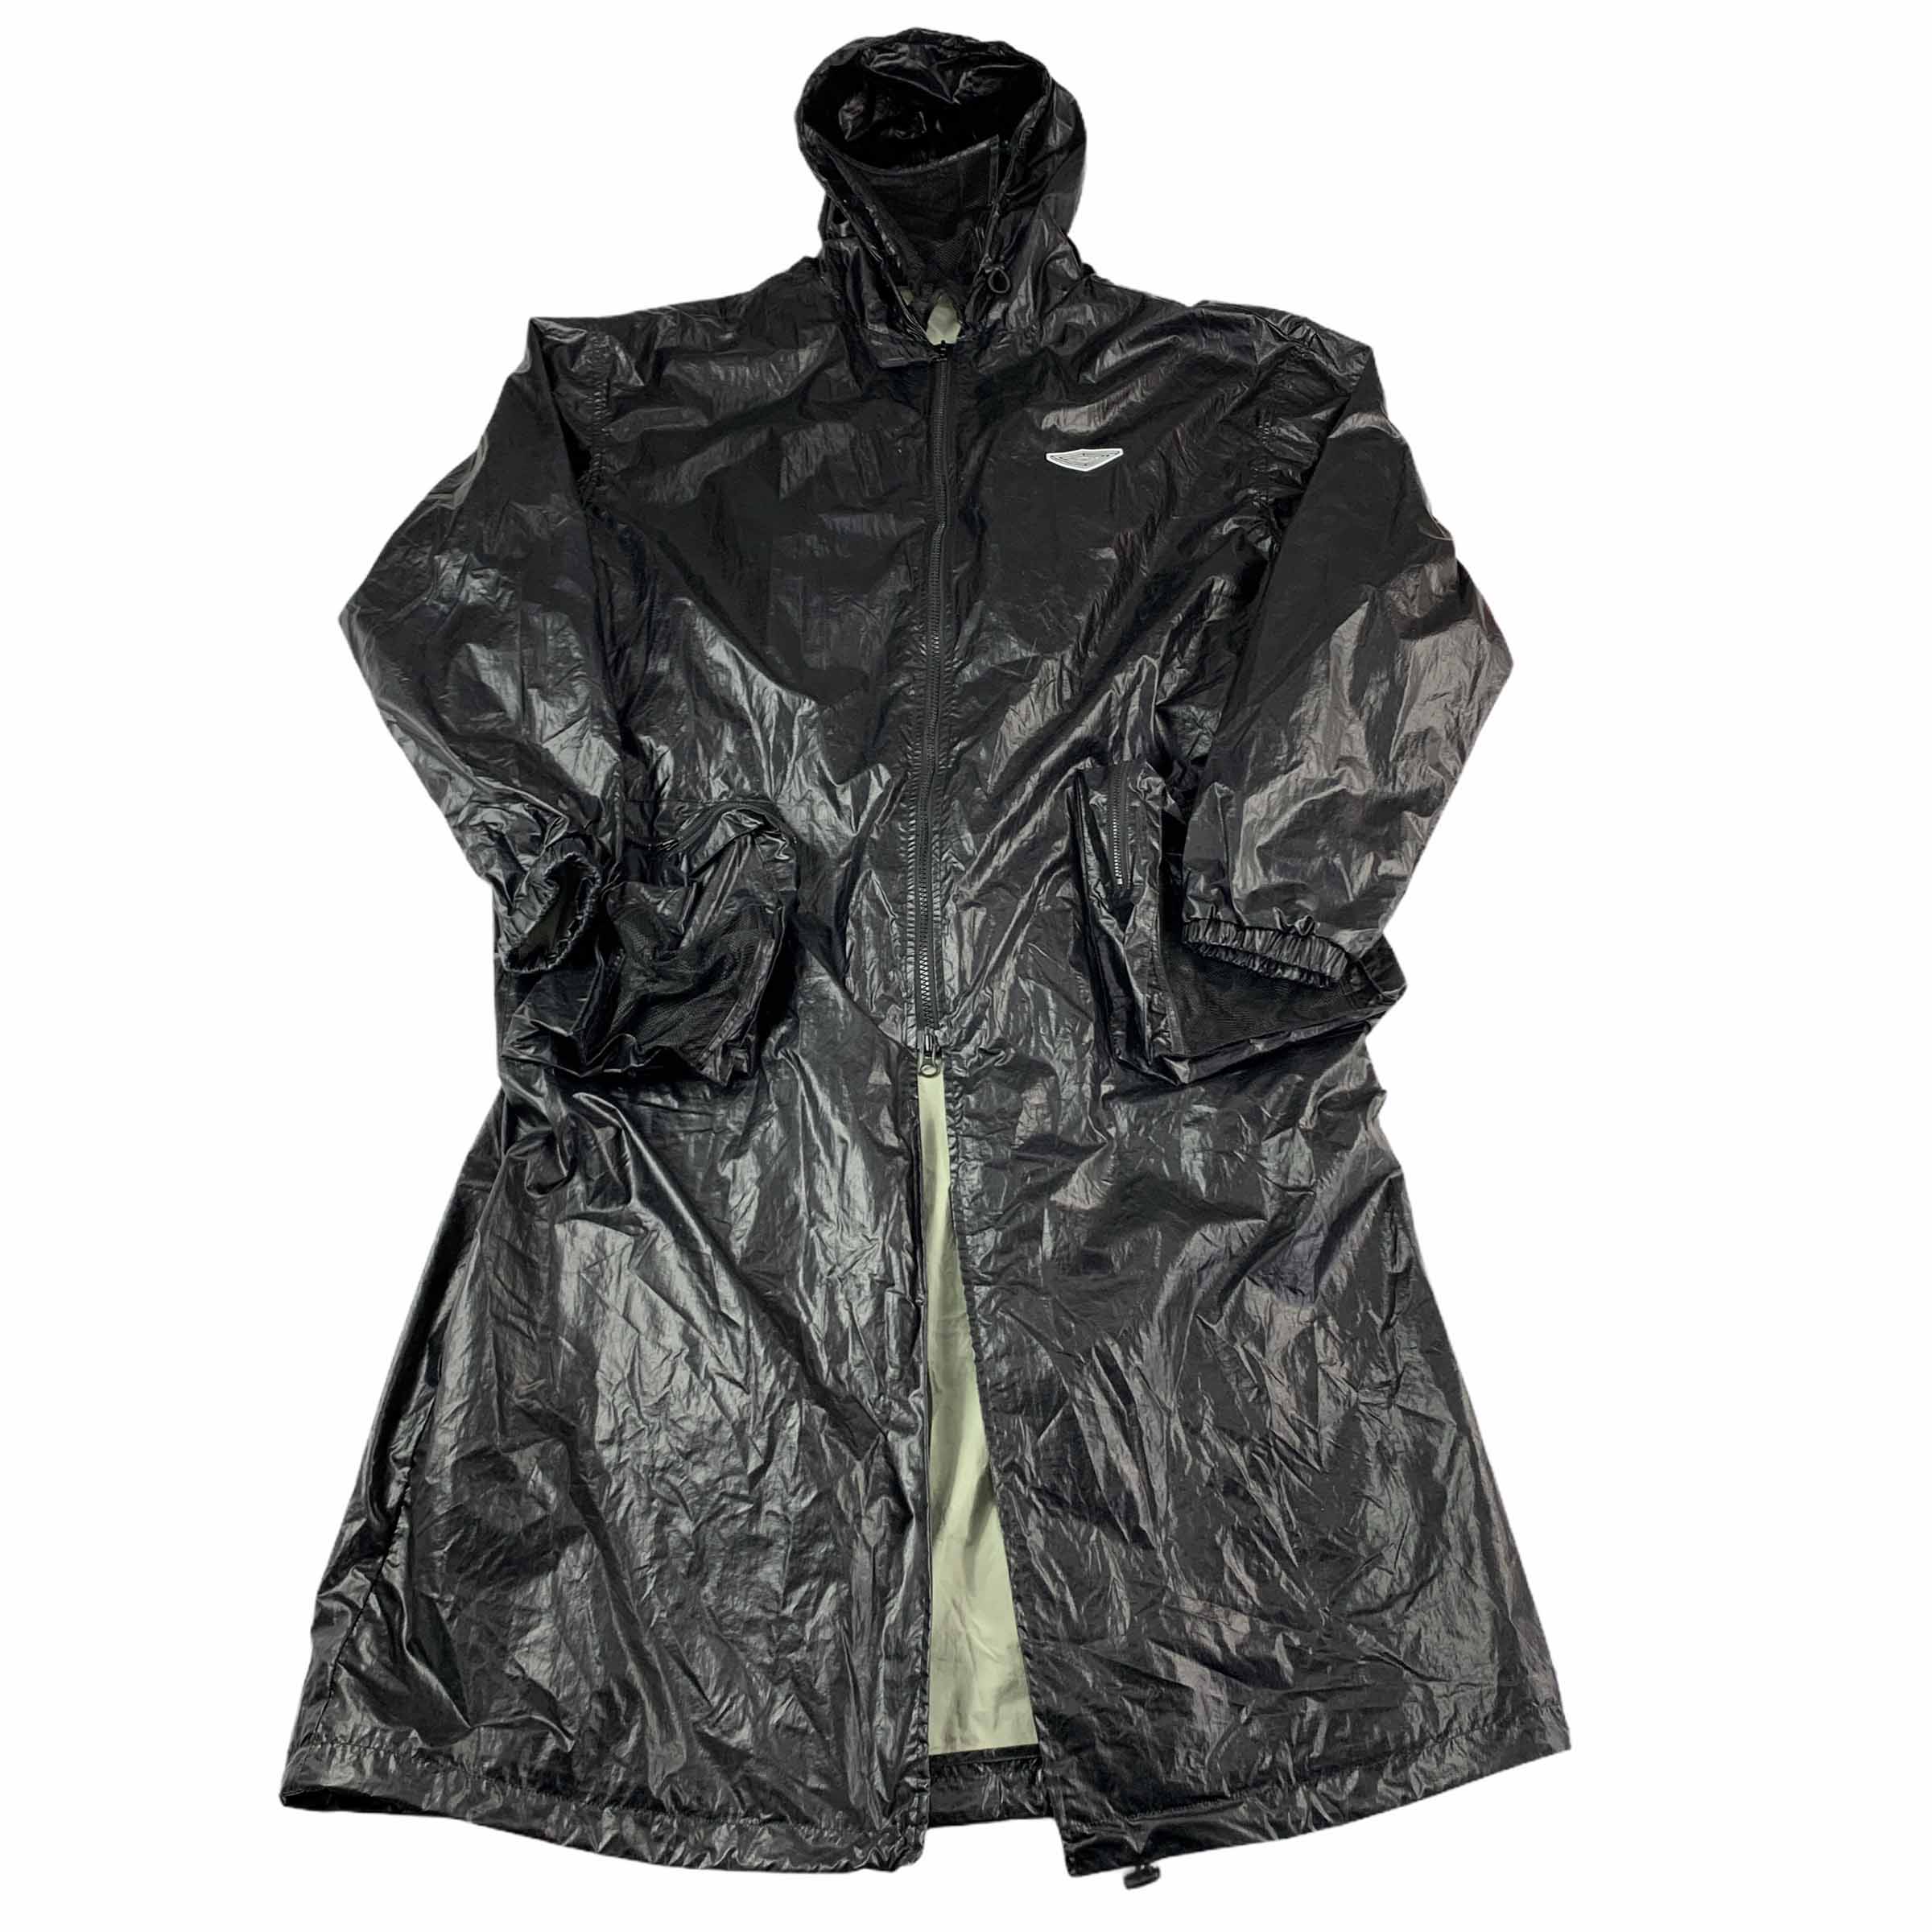 [Dgnak] Hooded Raincoat Bk (Sample) - Size 48